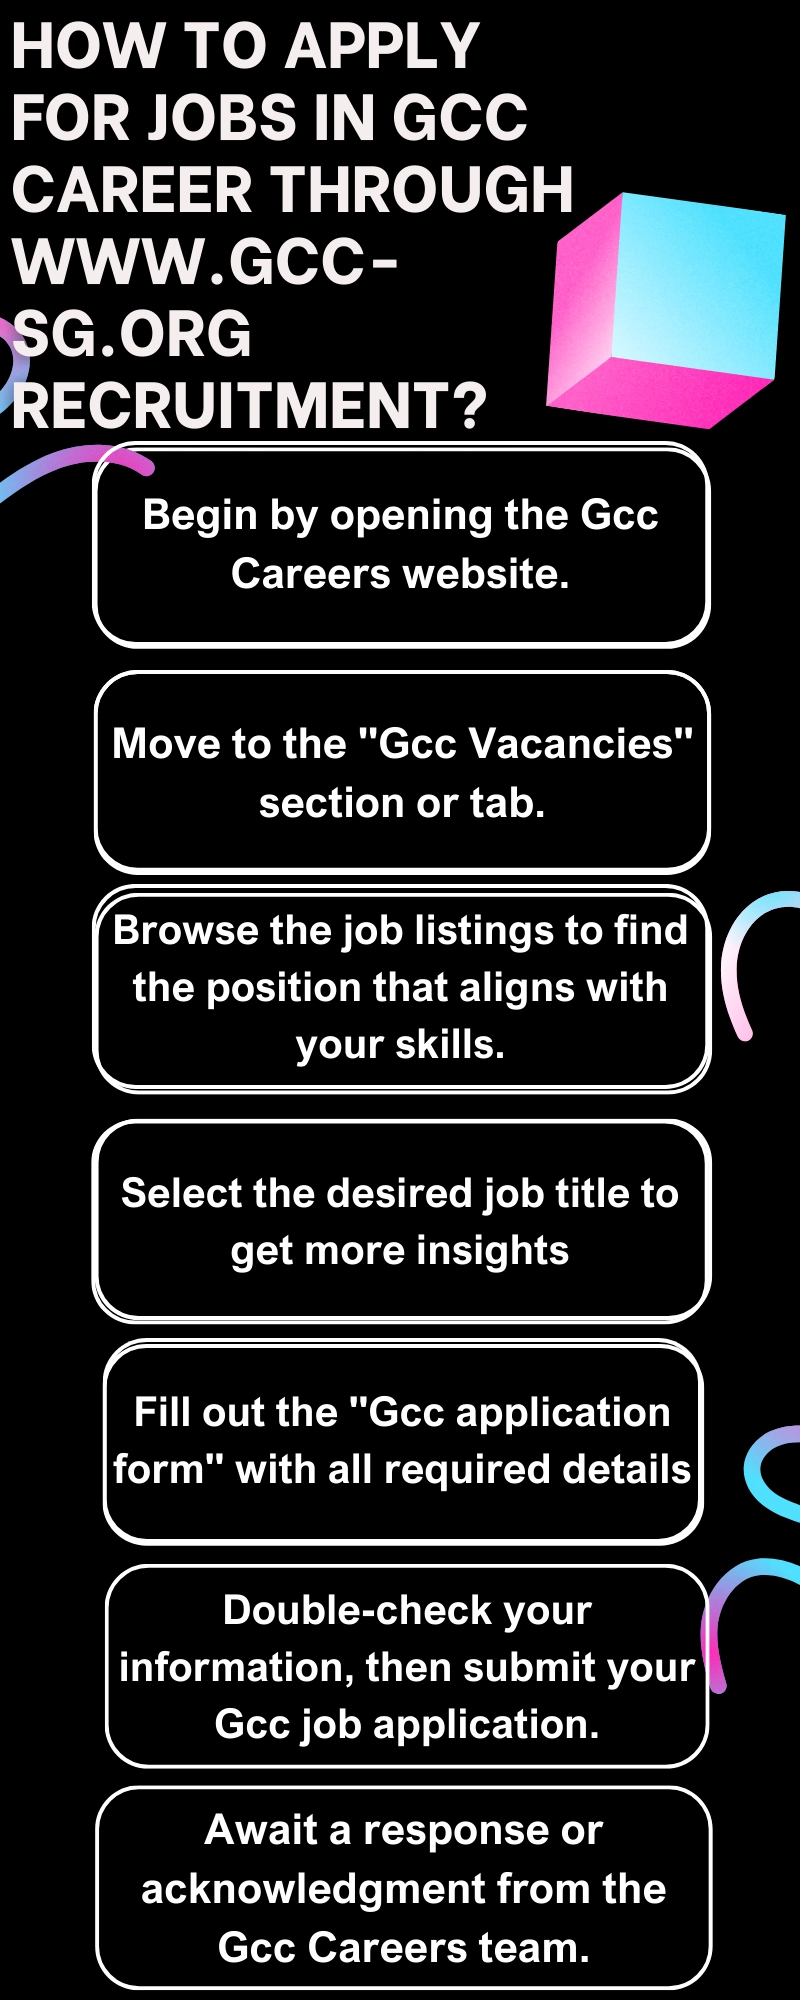 How to Apply for Jobs in Gcc Career through www.gcc-sg.org recruitment?